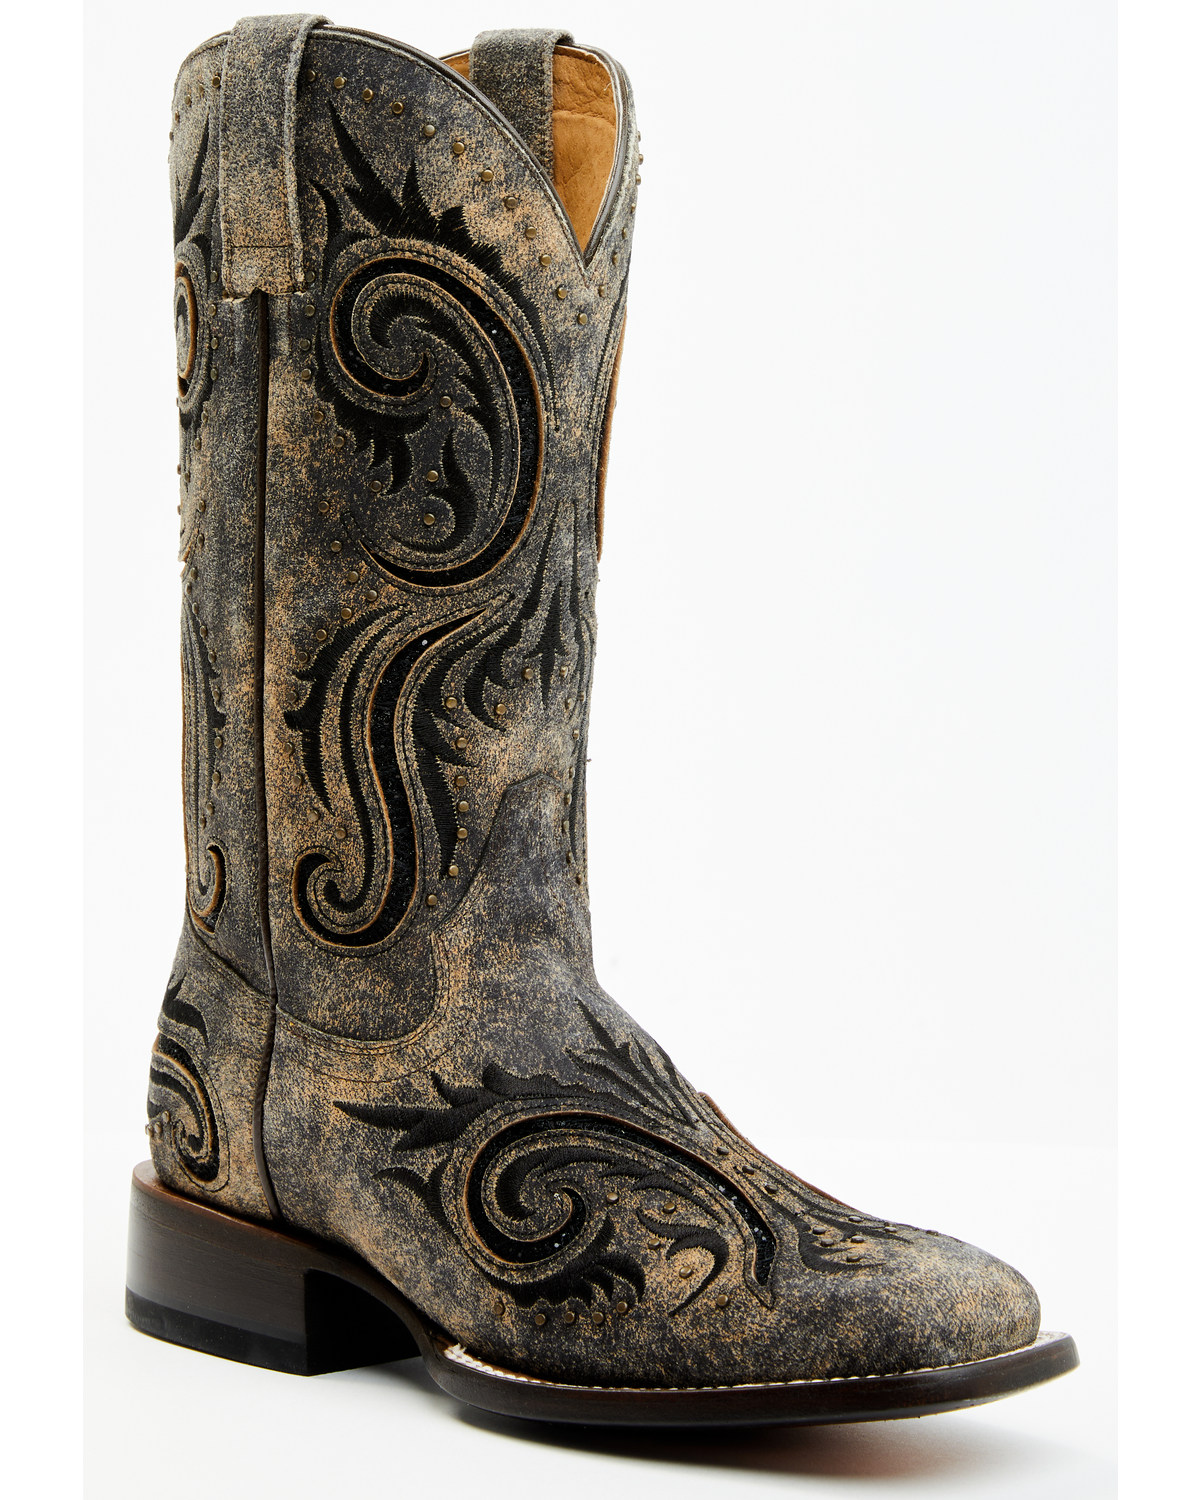 Shyanne Women's Glenna Western Boots - Broad Square Toe